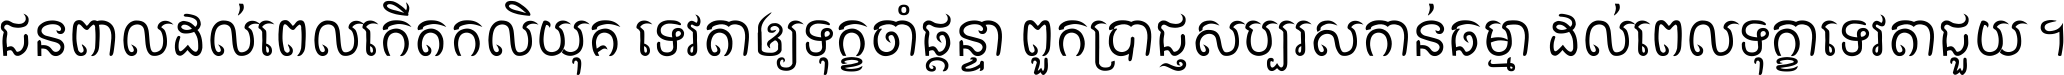 Khmer Chamnanit